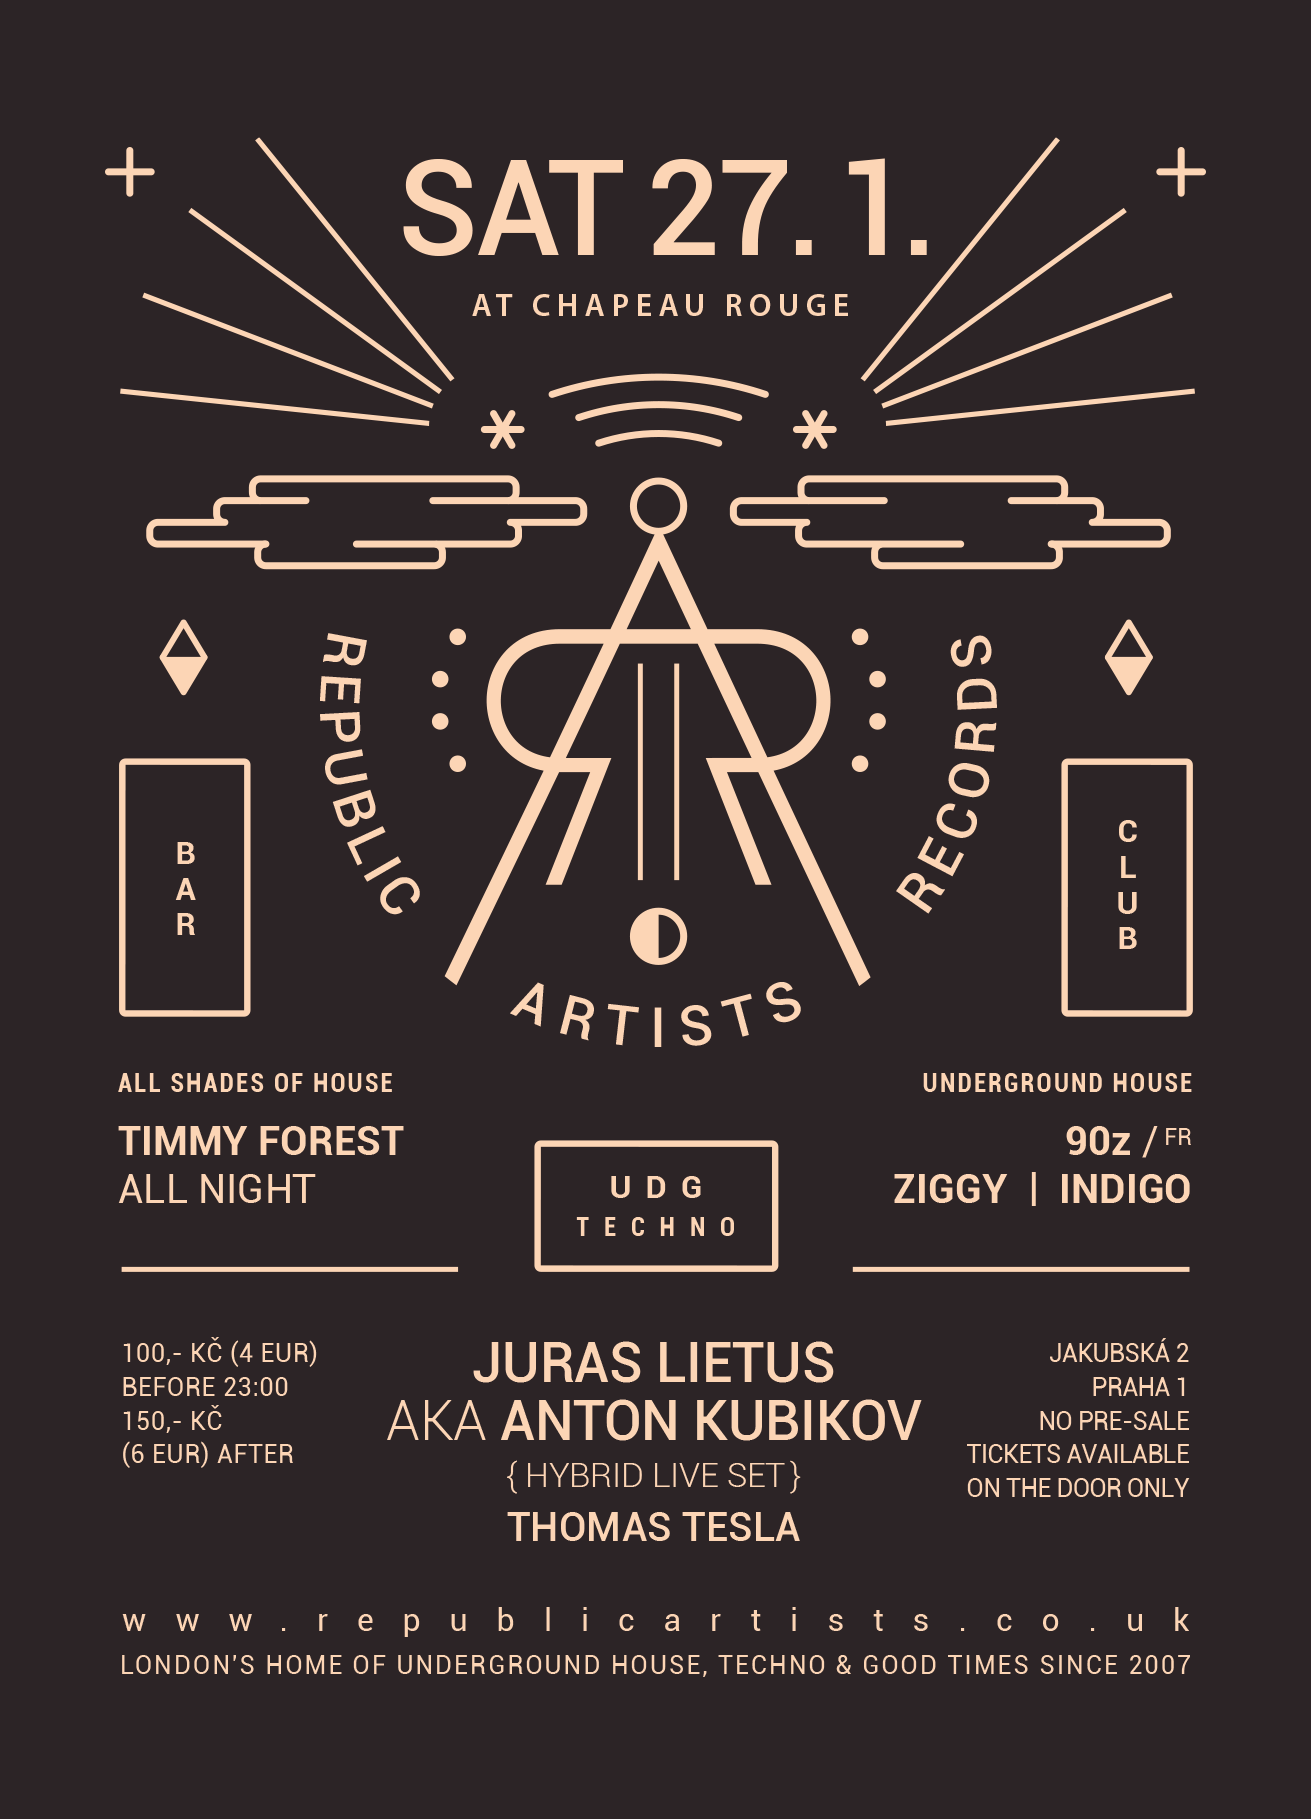 Republic Artists with Juras Lietus hybrid live set, Thomas Tesla & many more over 3 floors - フライヤー裏